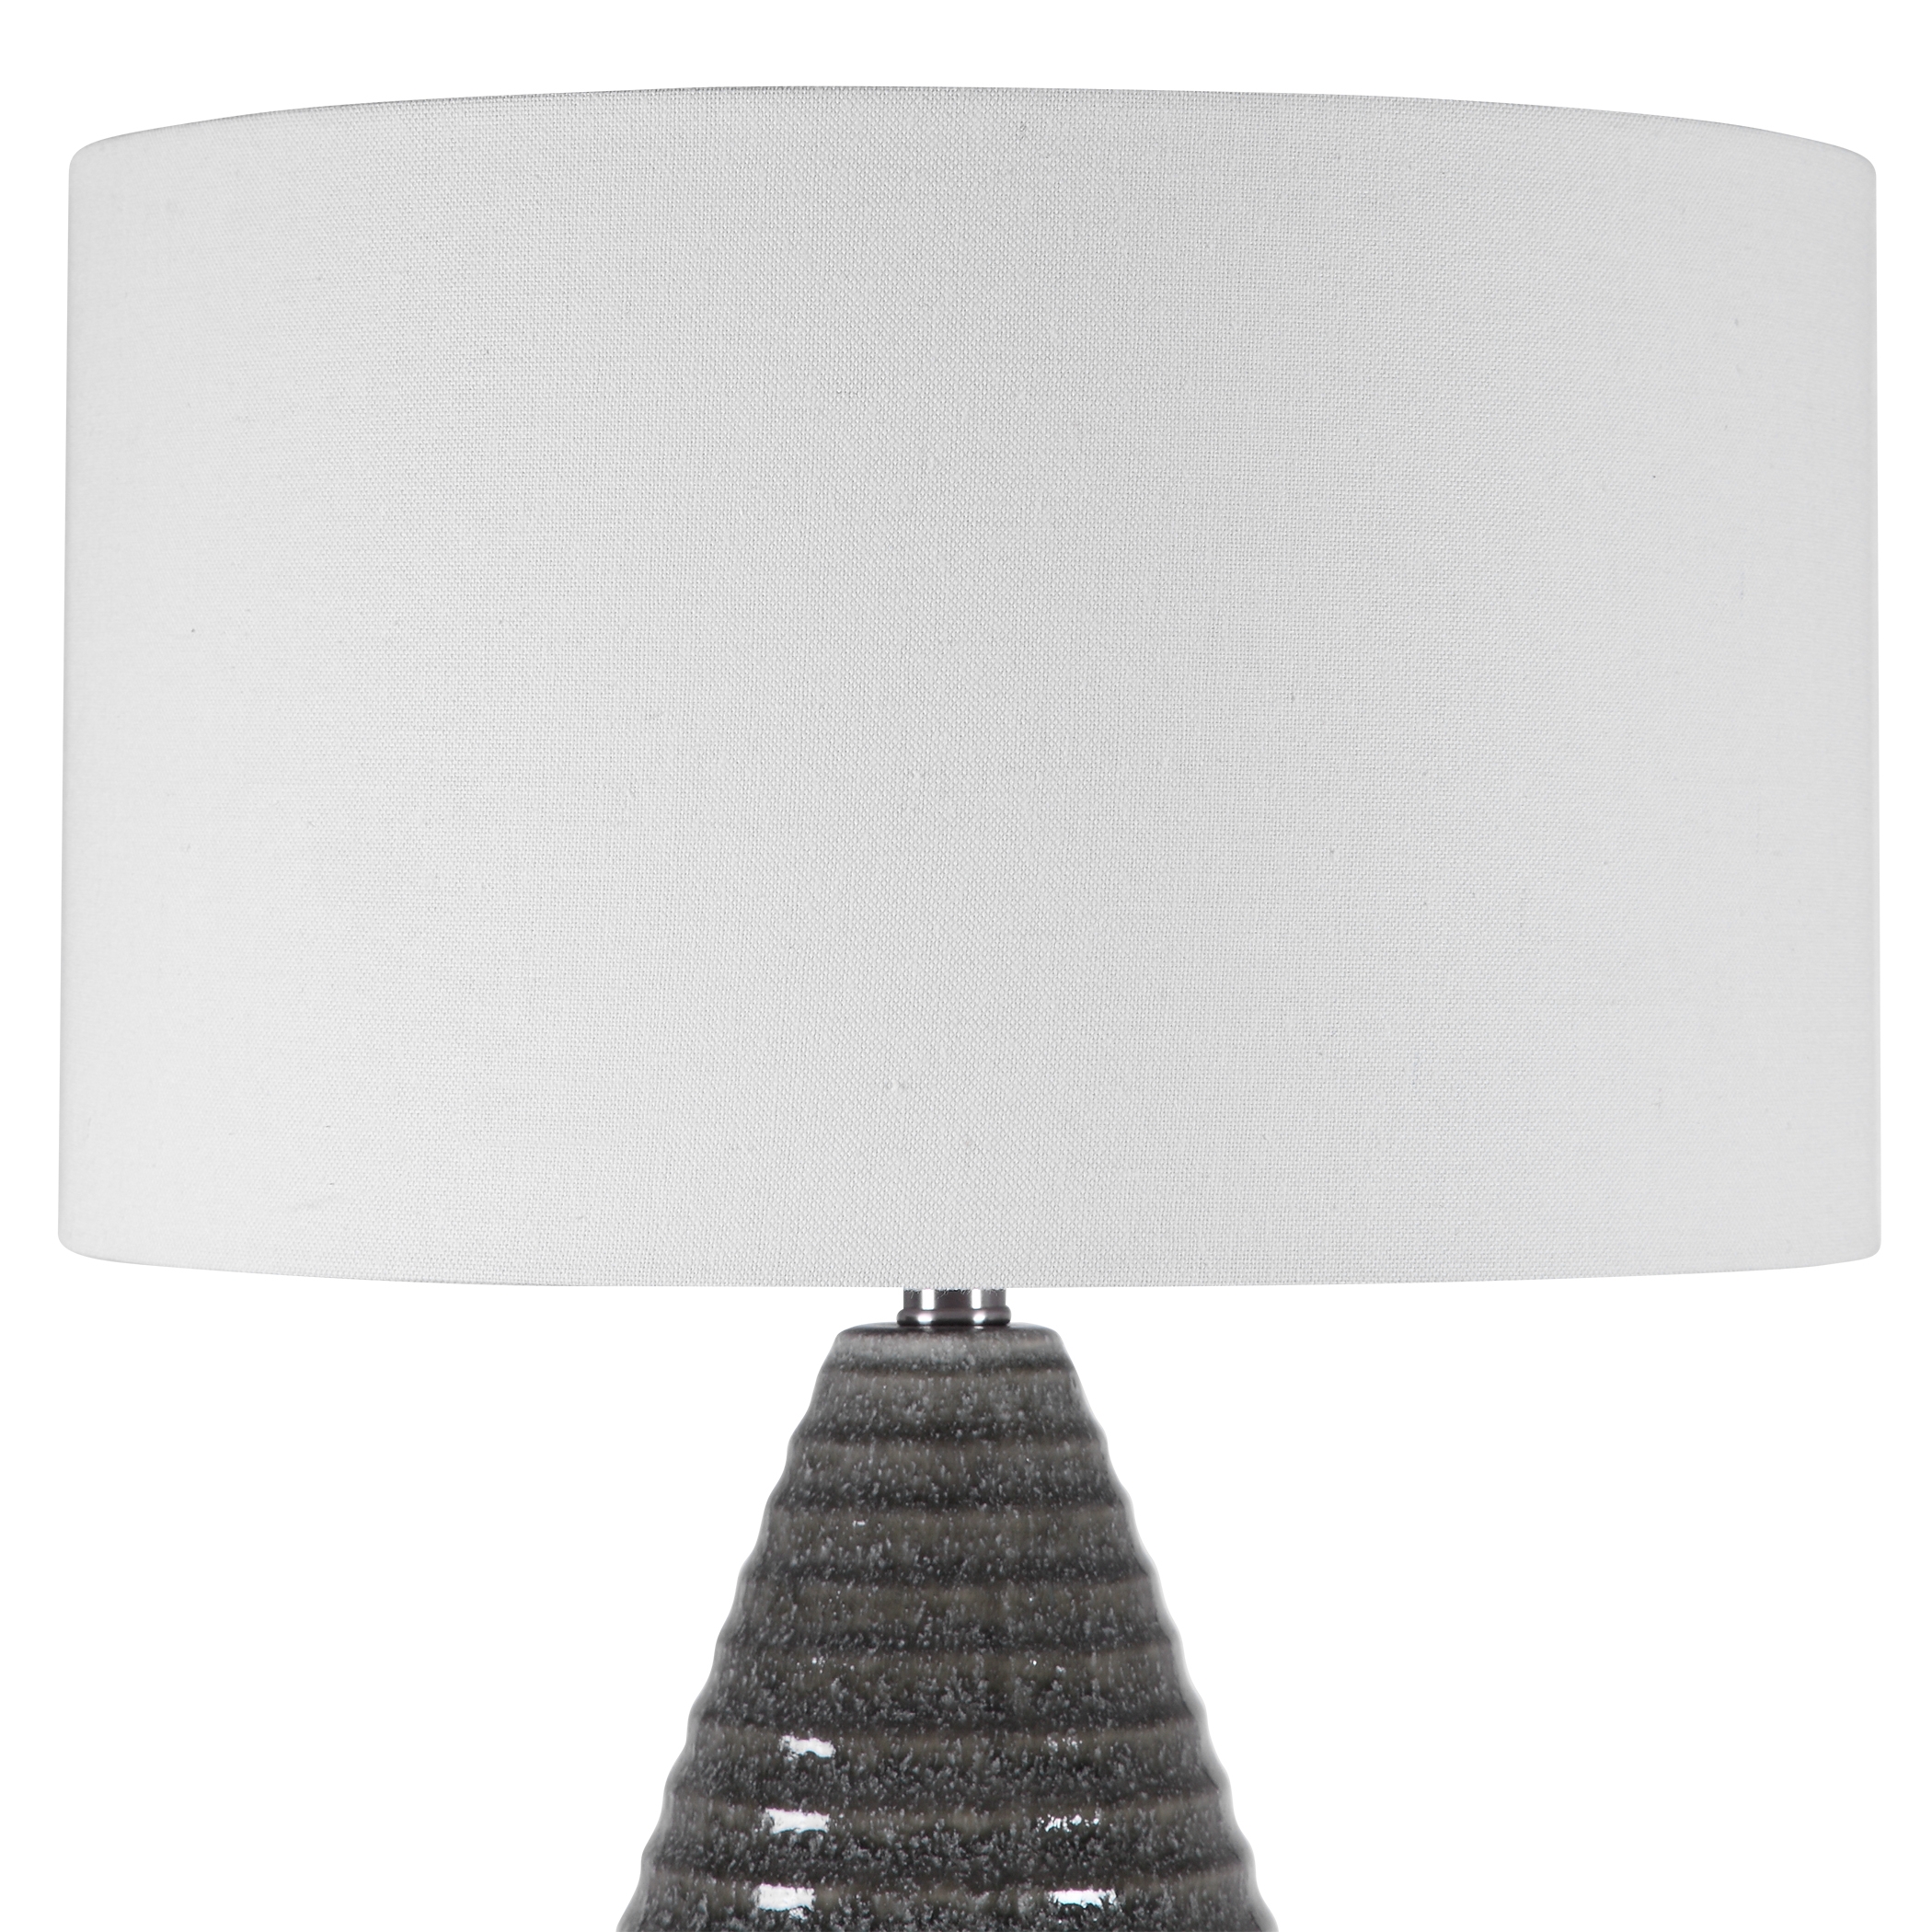 Carden Smoke Gray Table Lamp - Image 3